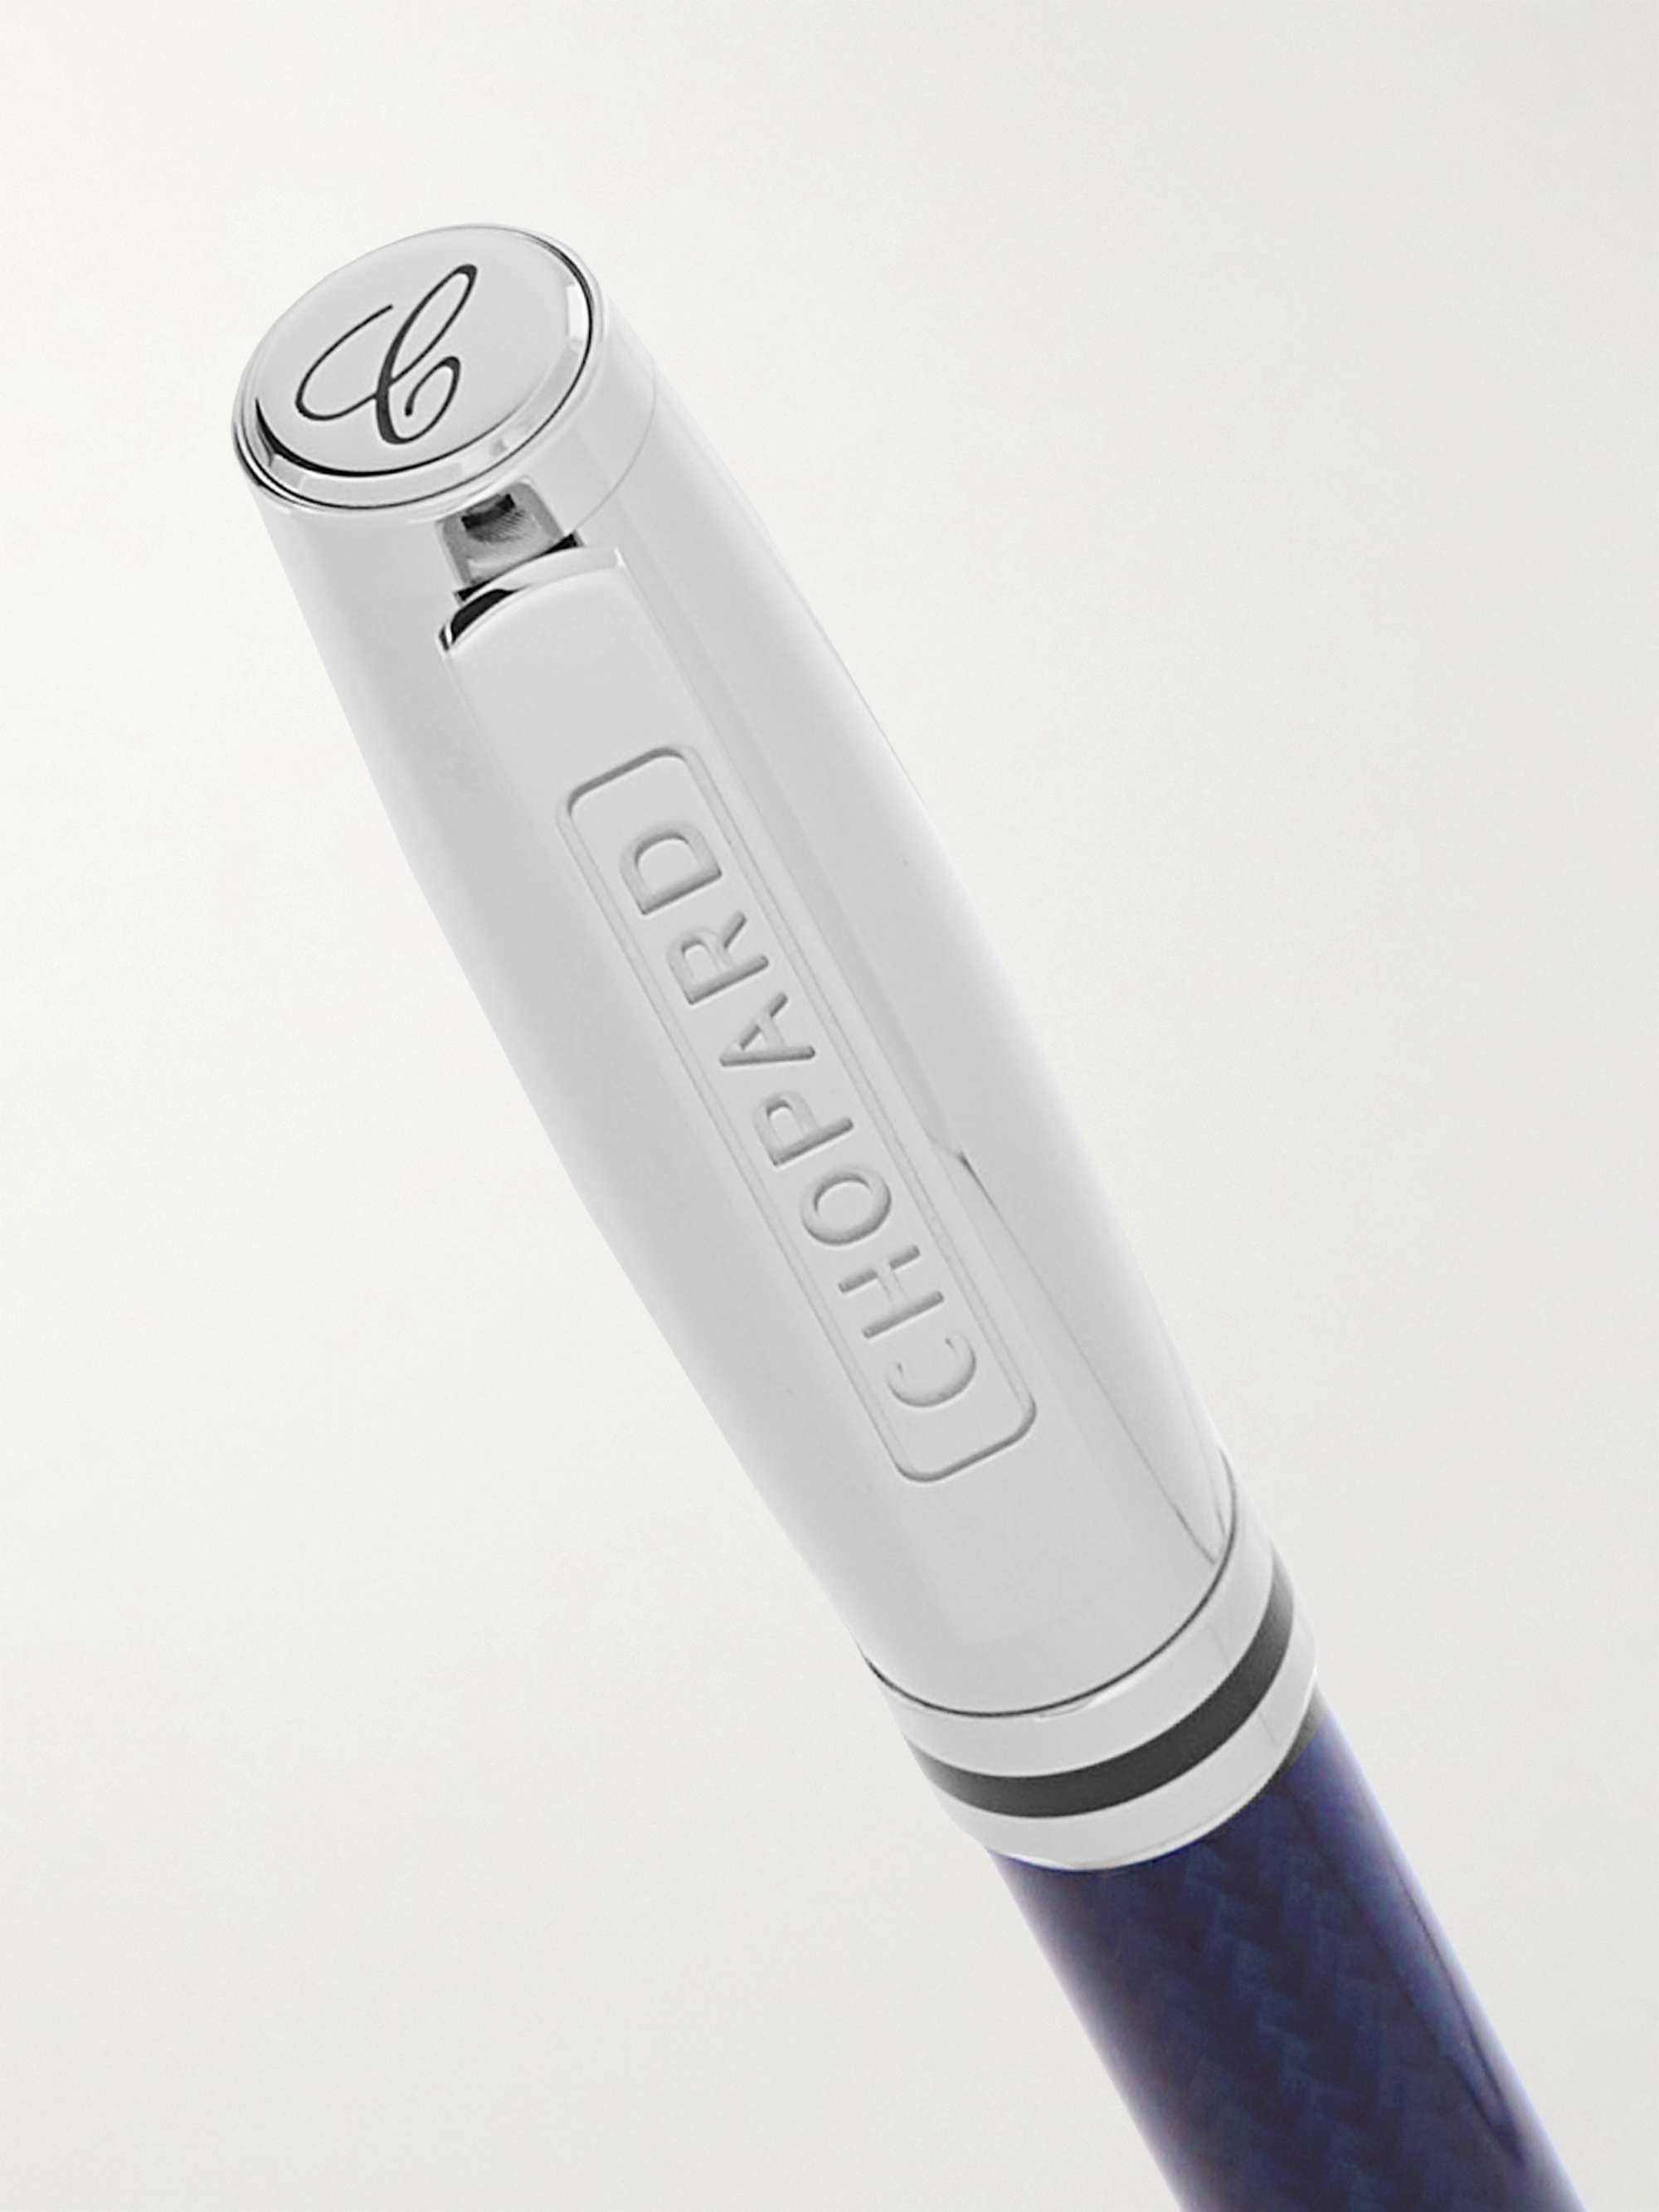 CHOPARD Mille Migla Carbon Fibre and Palladium Ballpoint Pen